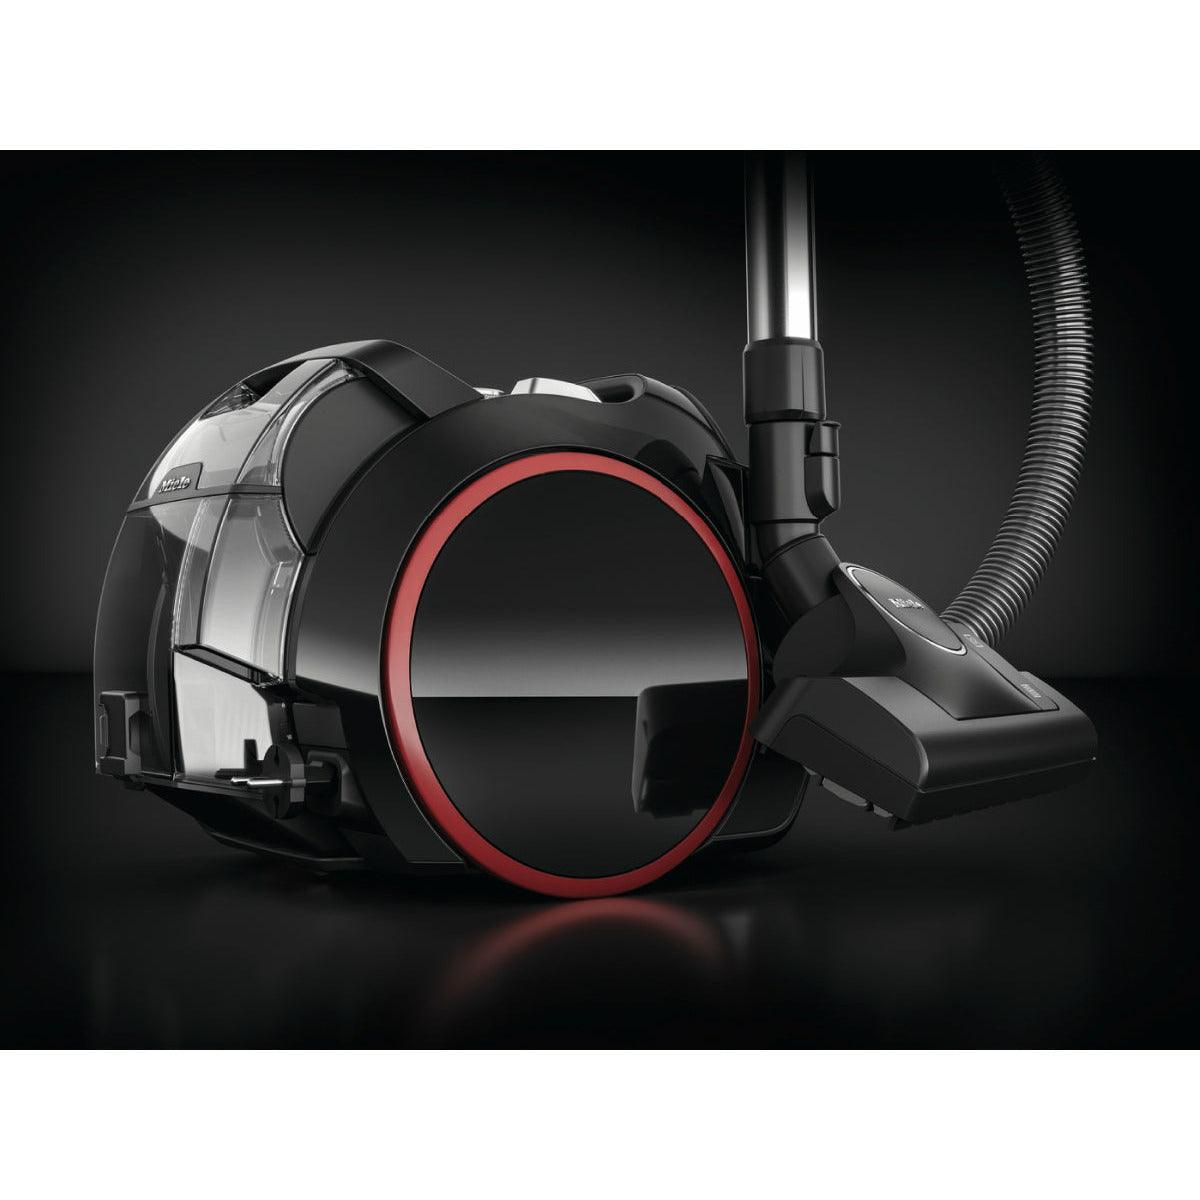 Miele Boost CX1 PowerLine Bagless Cylinder Vacuum Cleaner - Obsidian Black (7484948283580)